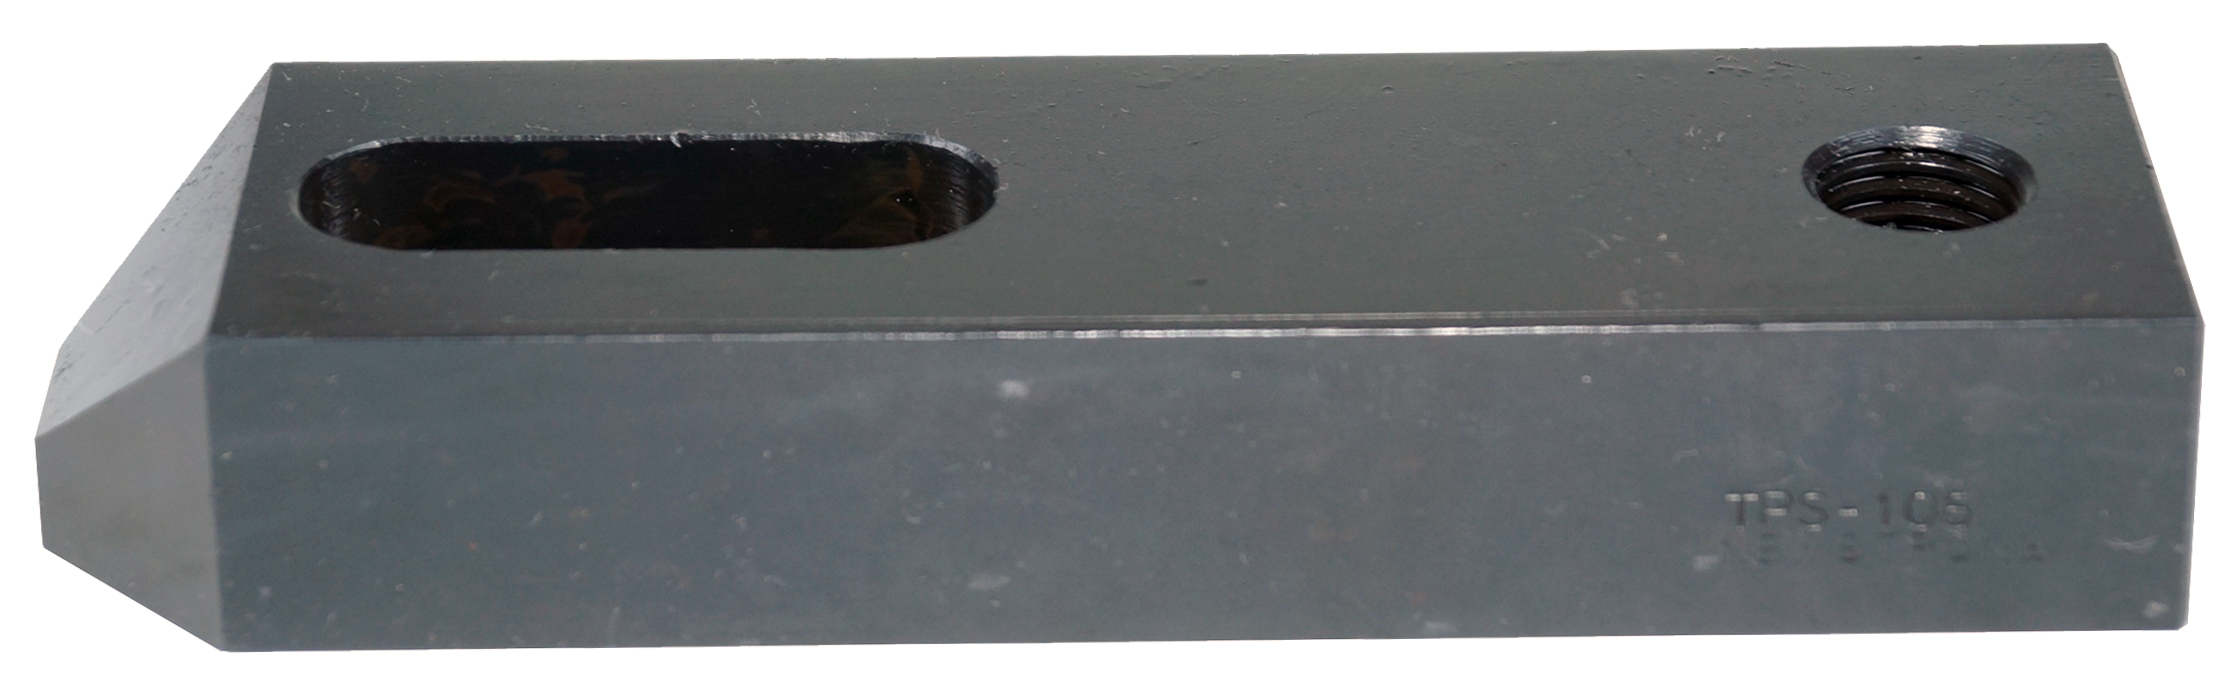 Abrazadera de correa con orificio para tornillo - Acero S45C, 100-250 mm de longitud, TPS